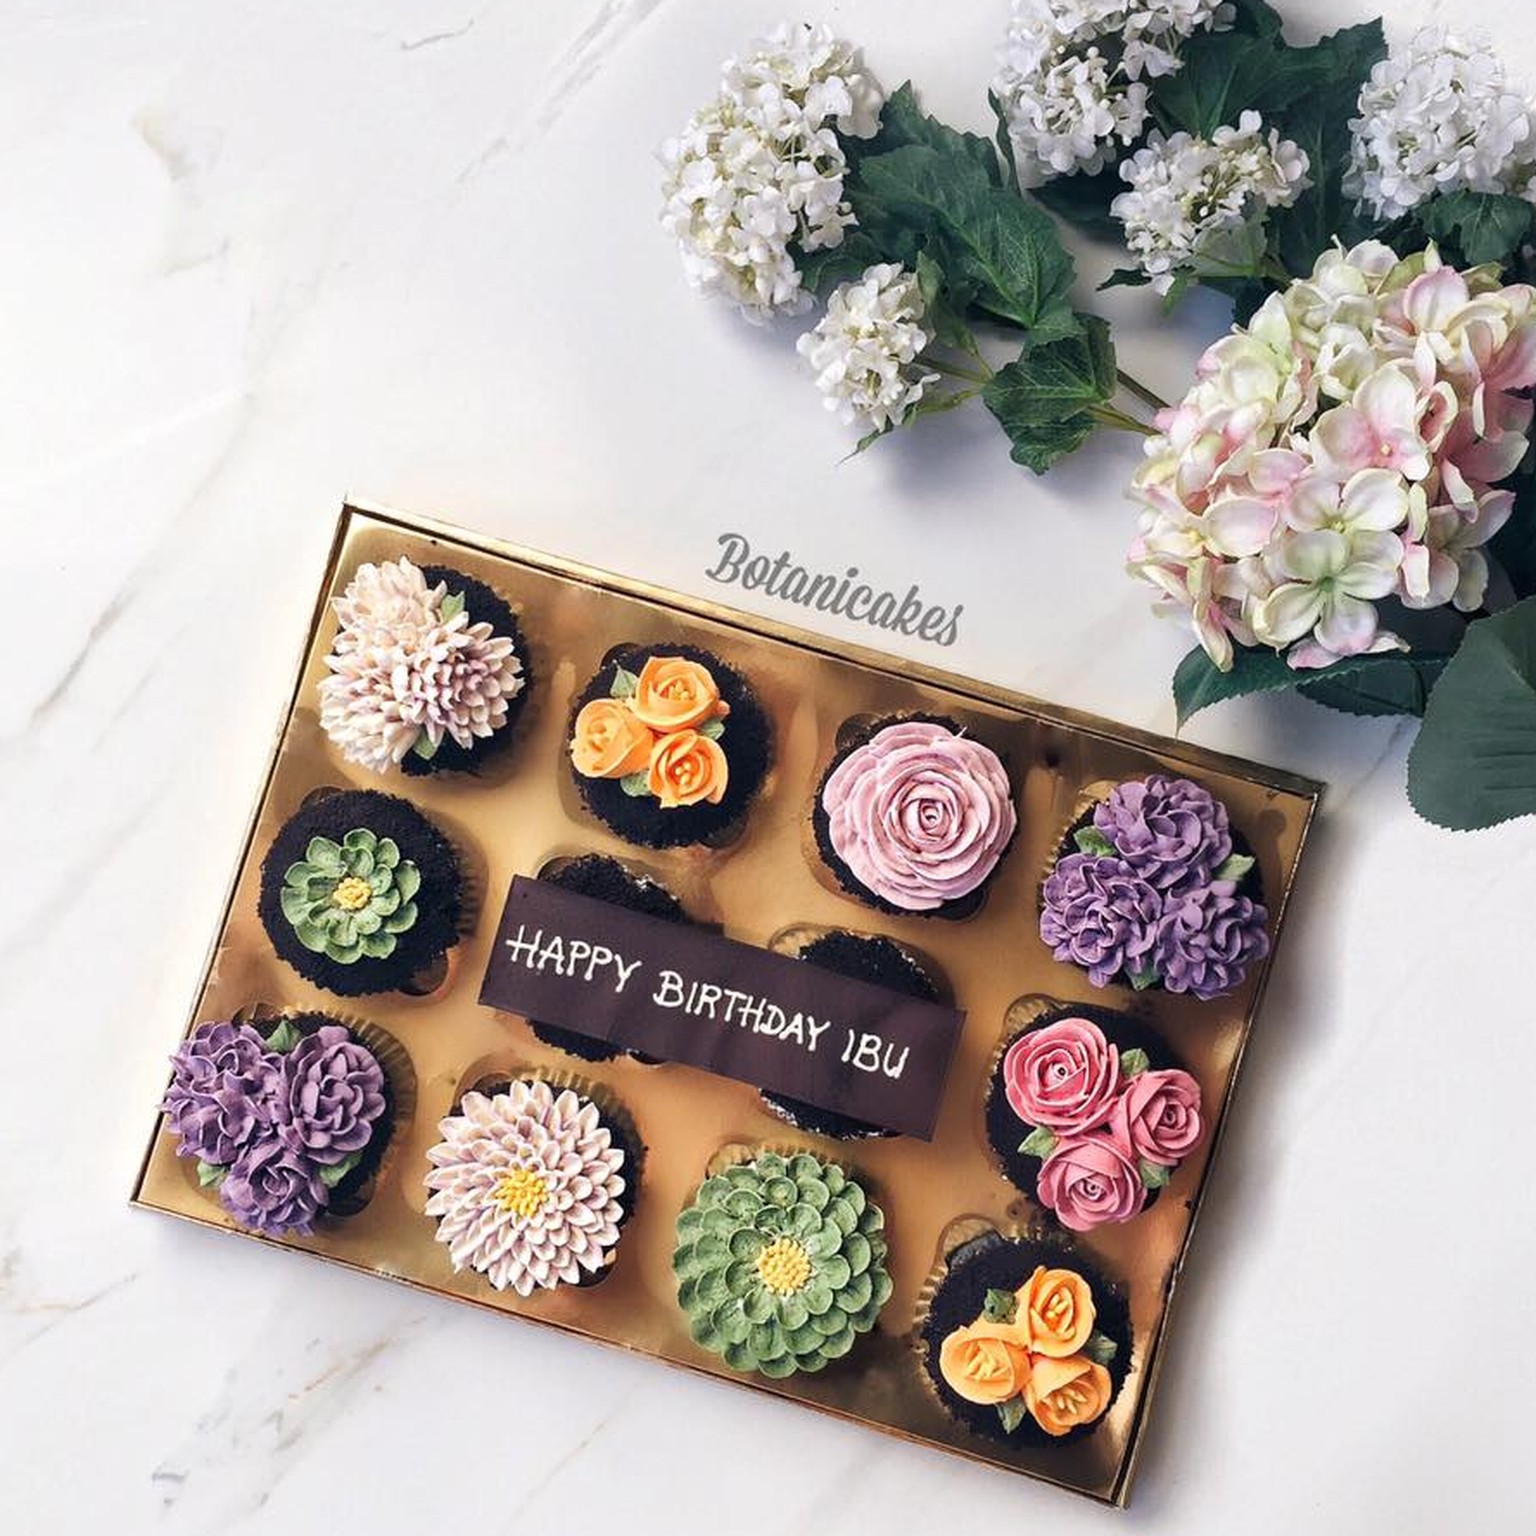 Blumen Cupcakes
https://www.instagram.com/botanicakes/